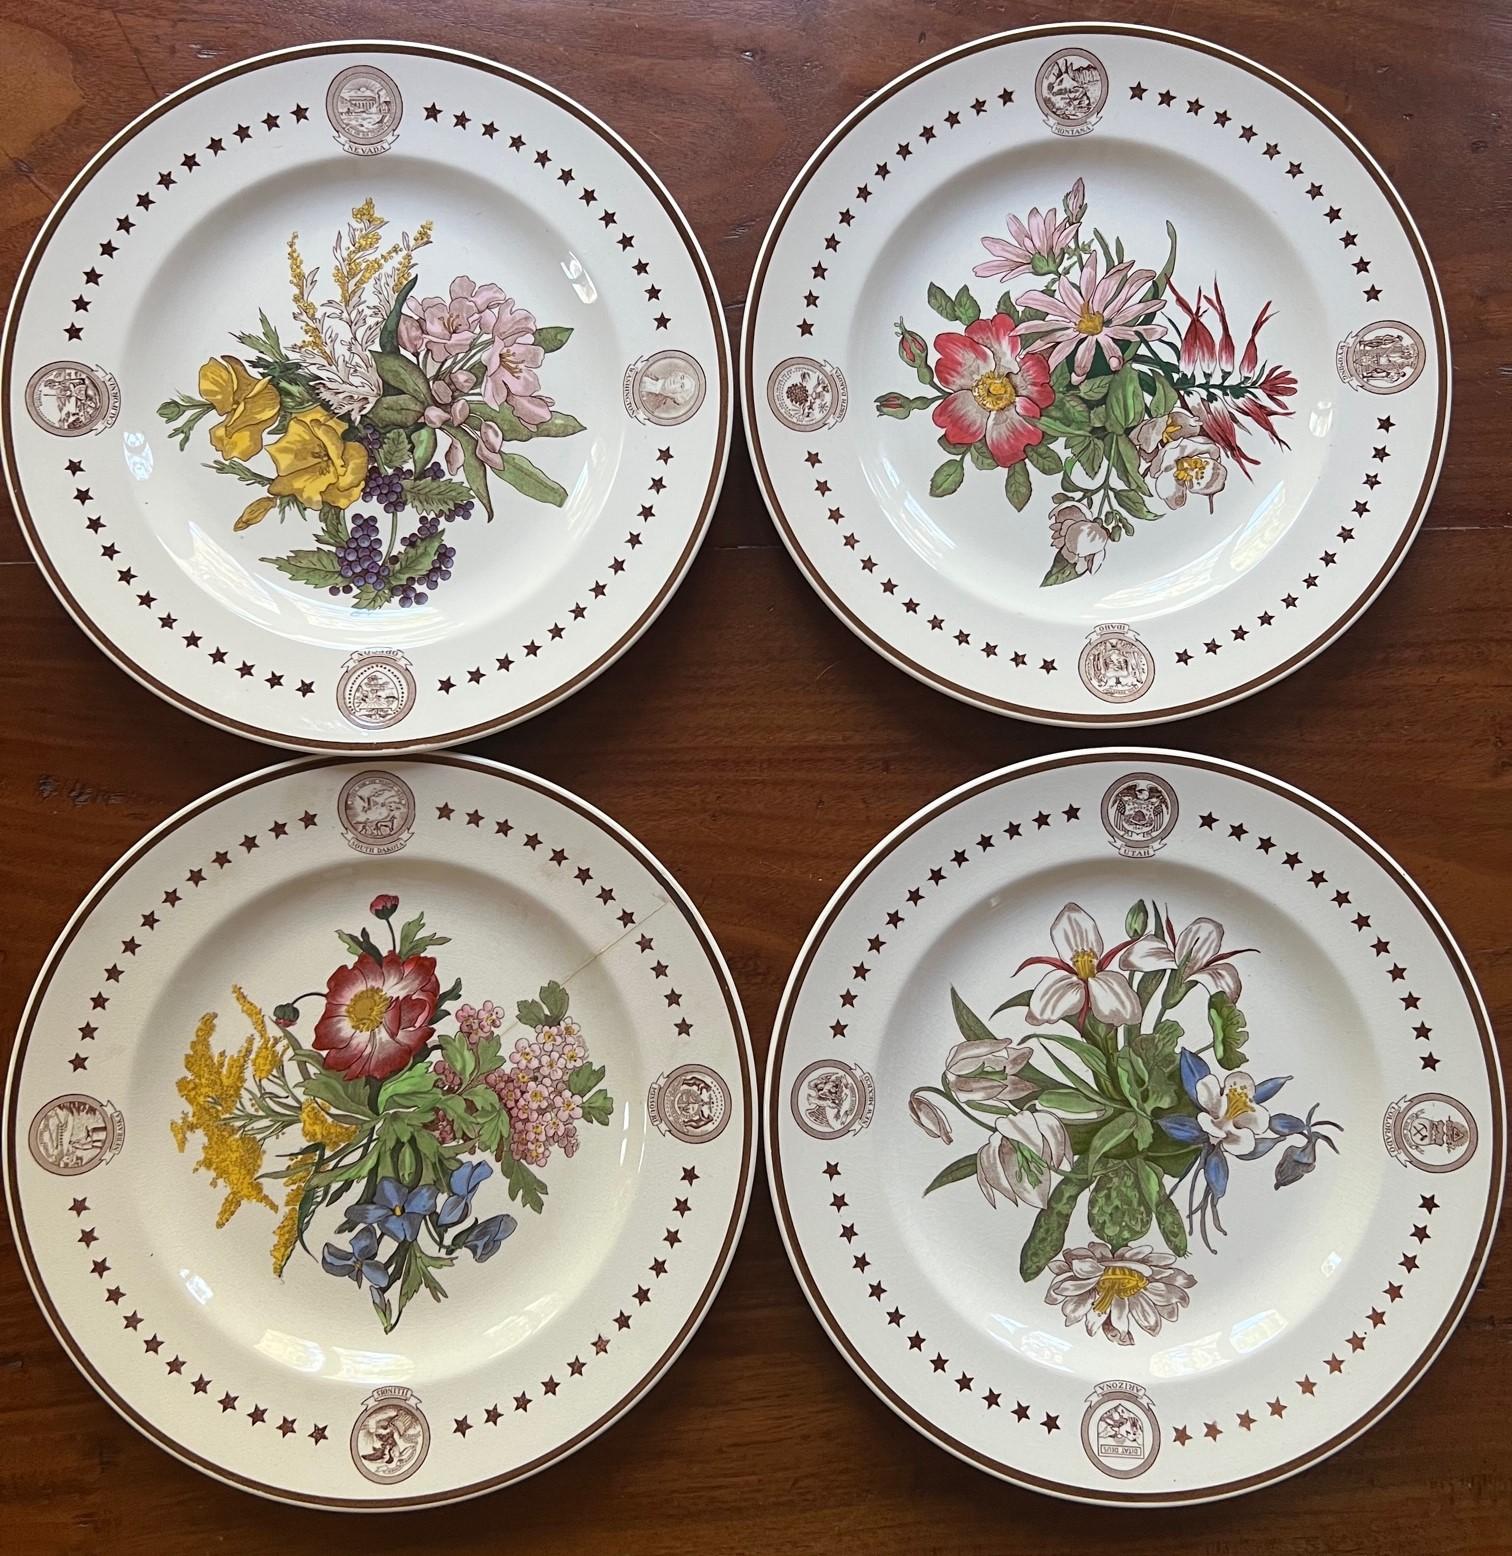 Complete set of twelve plates called 